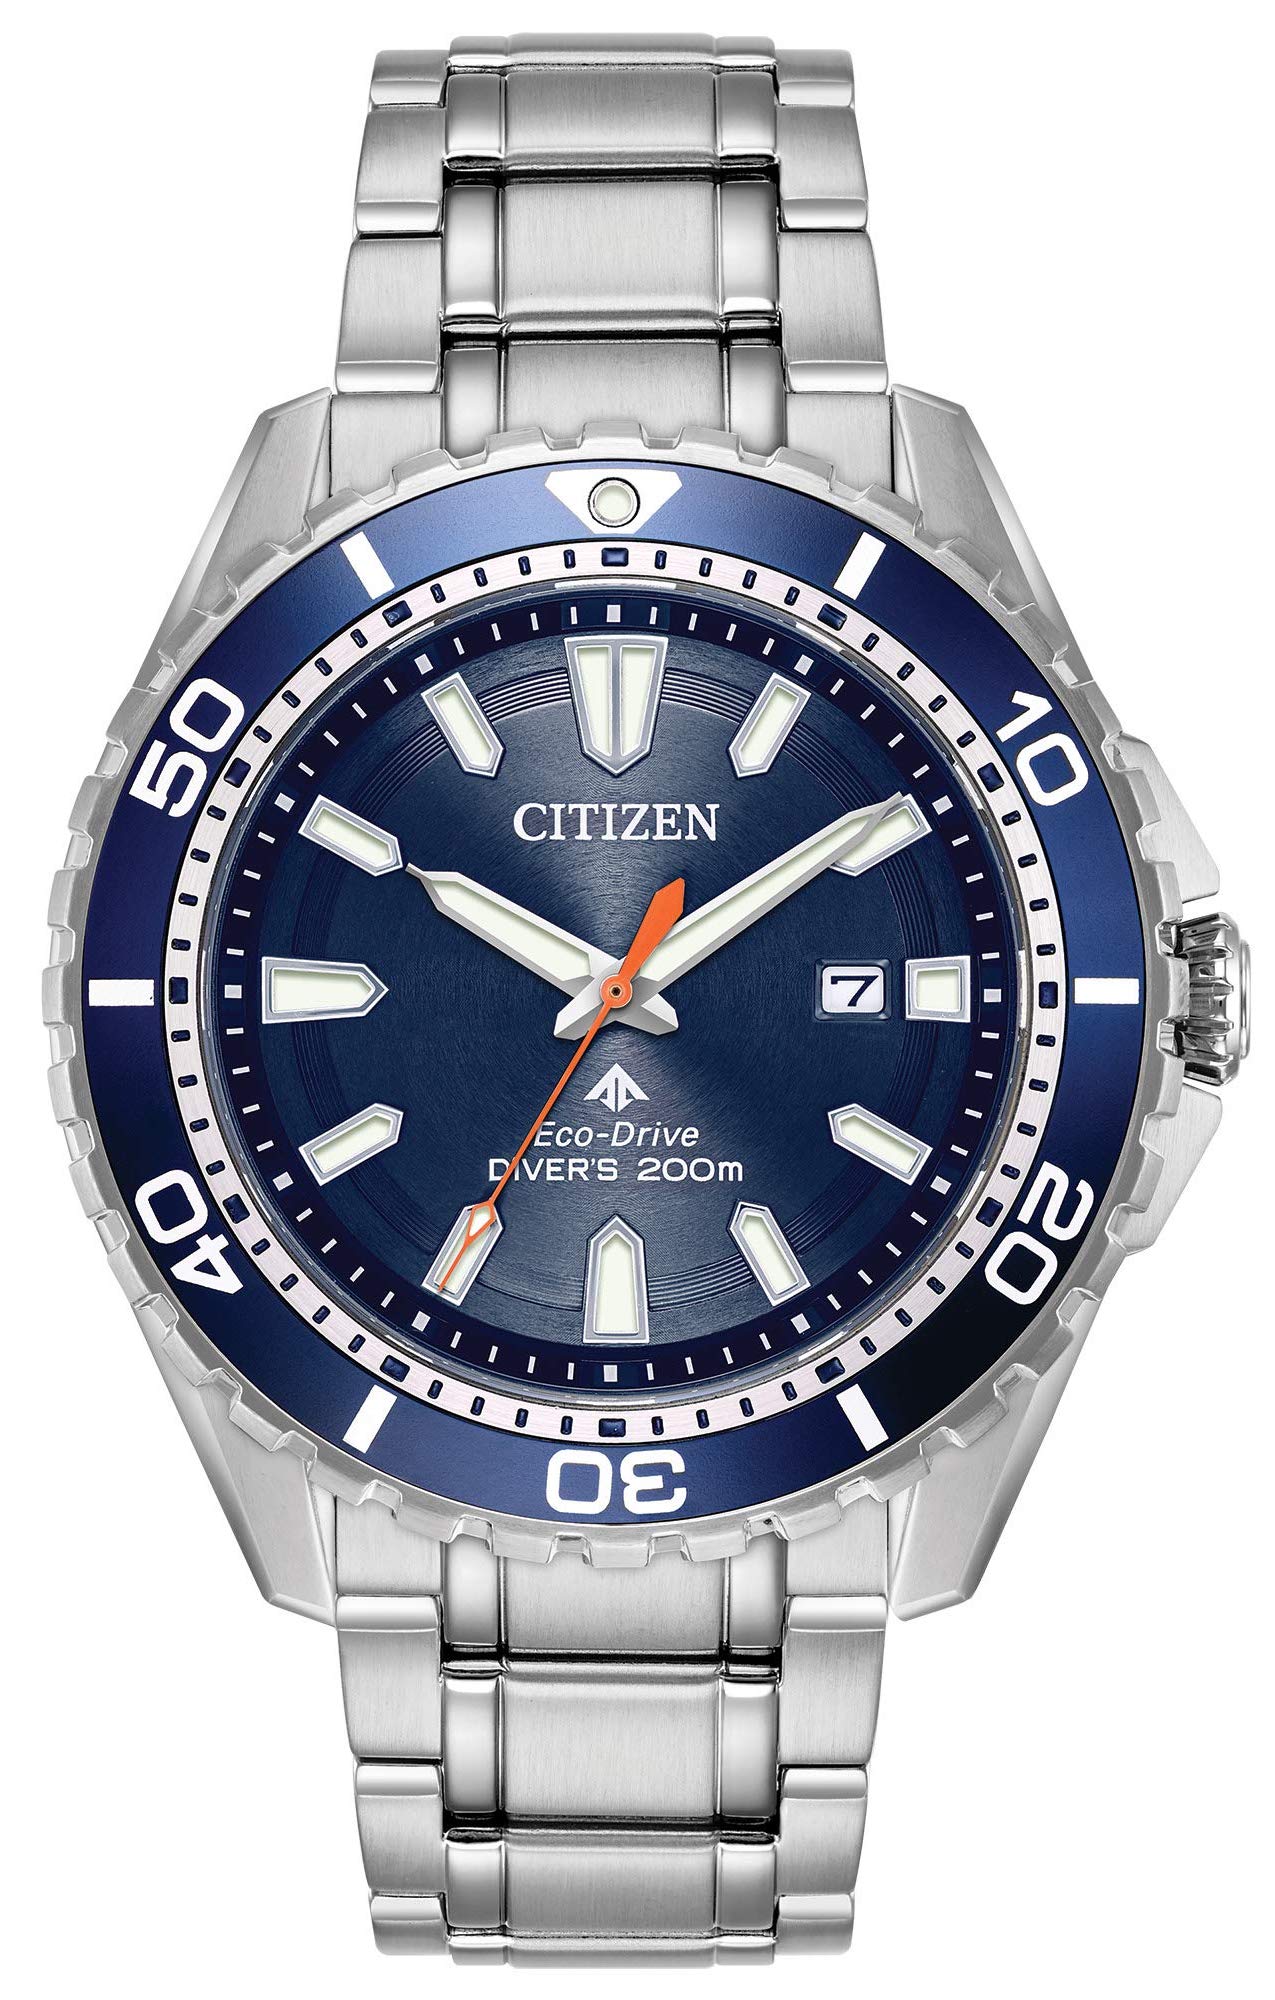 Citizen BN0200-56E Eco-Drive Dive Watch